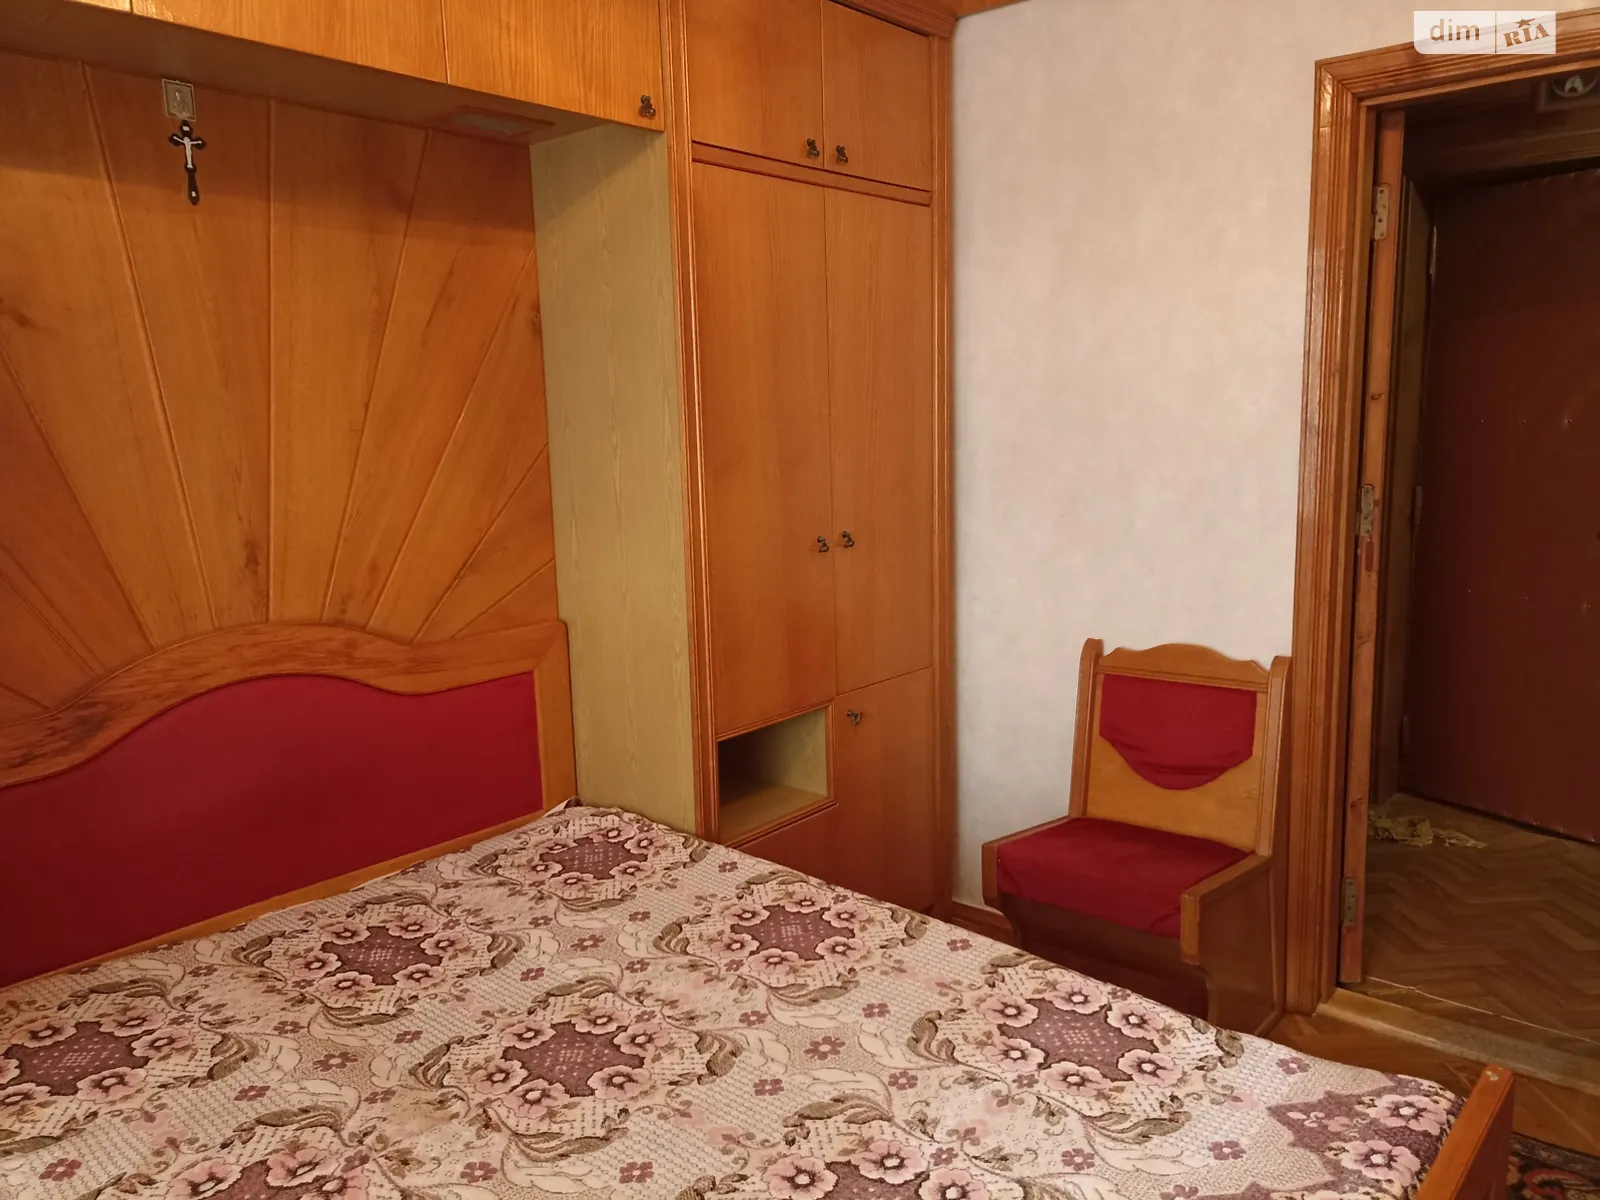 2-кімнатна квартира 52 кв. м у Луцьку, цена: 8500 грн